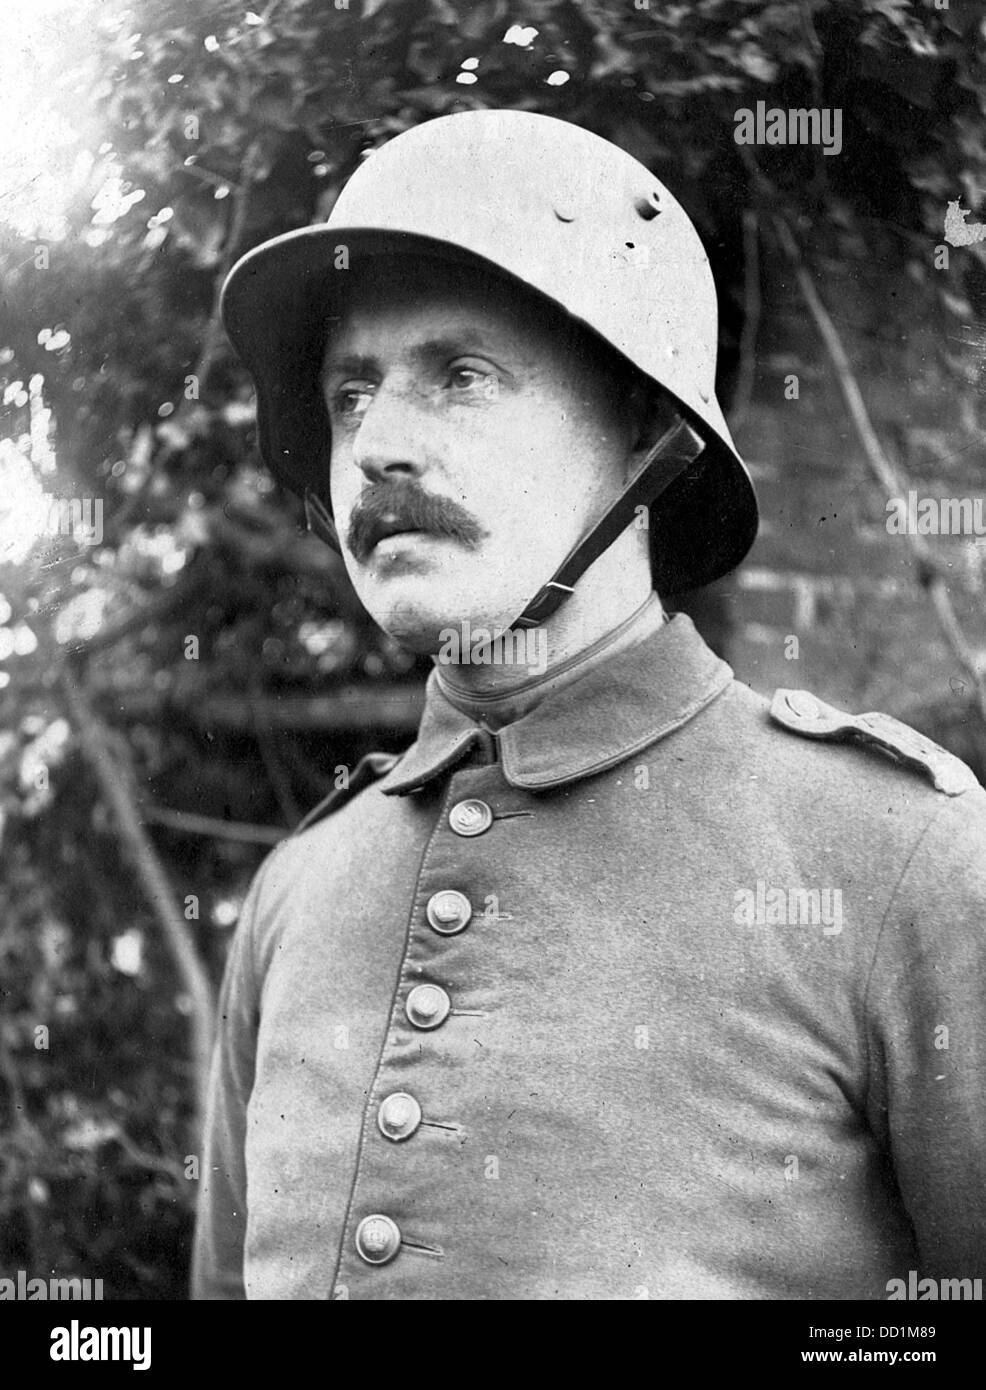 Germany. WW1 soldier in full uniform with steel helmet Stock Photo